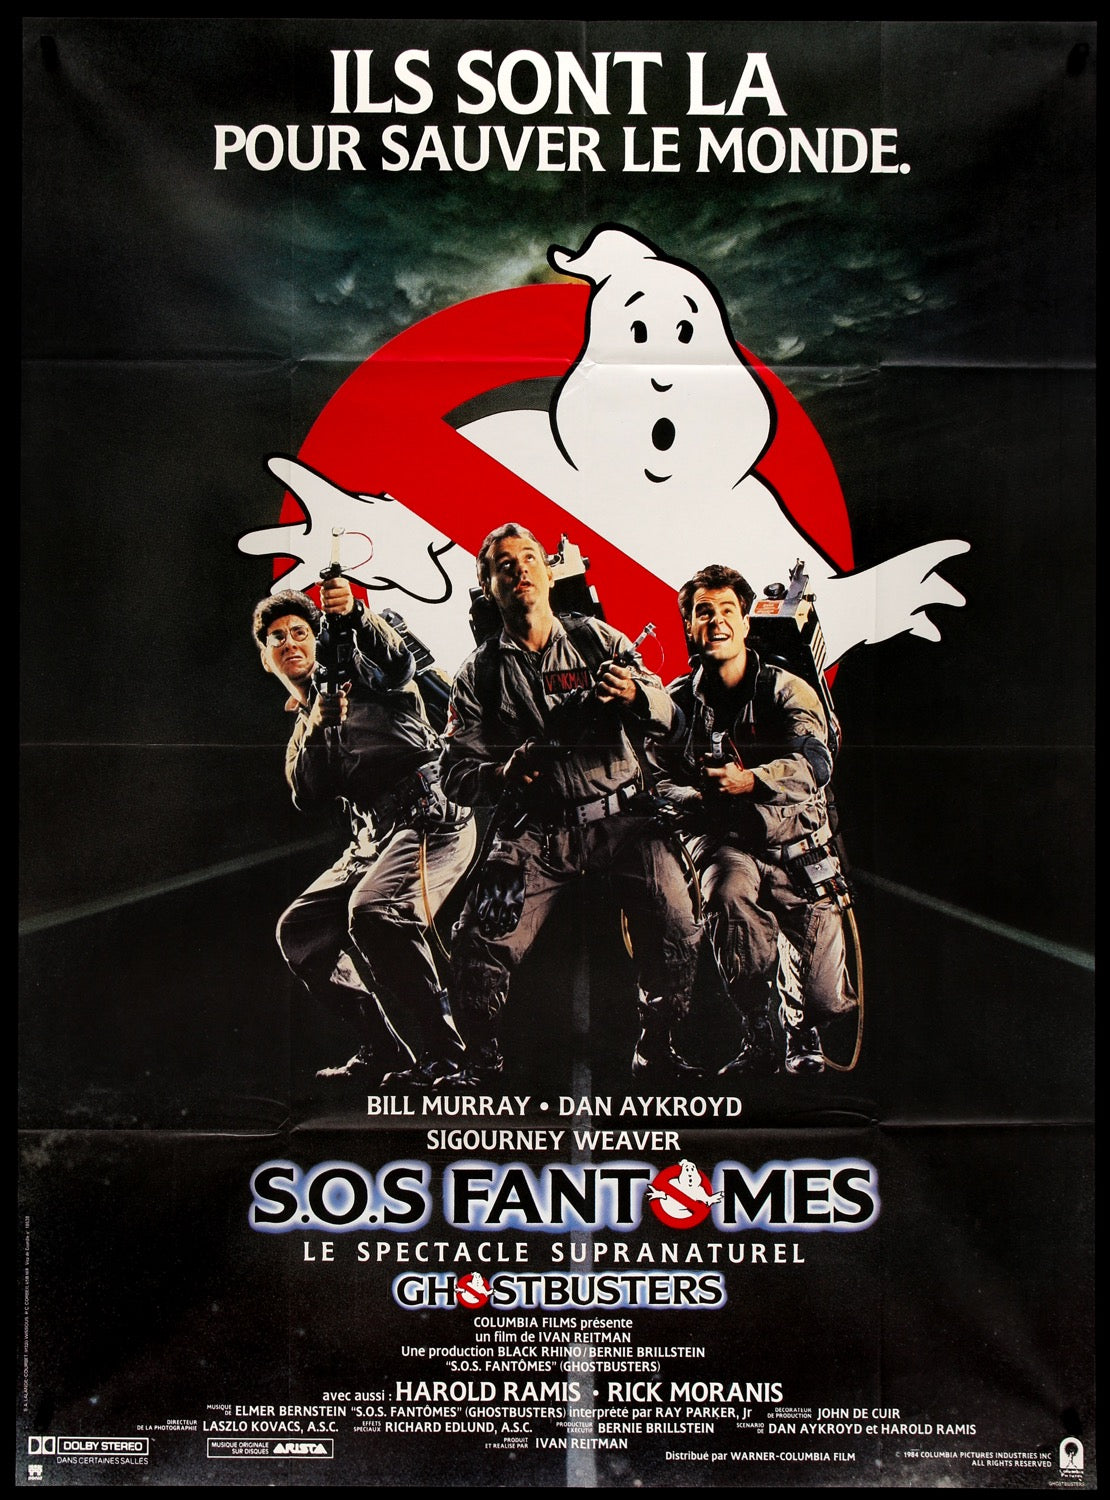 Ghostbusters (1984) original movie poster for sale at Original Film Art